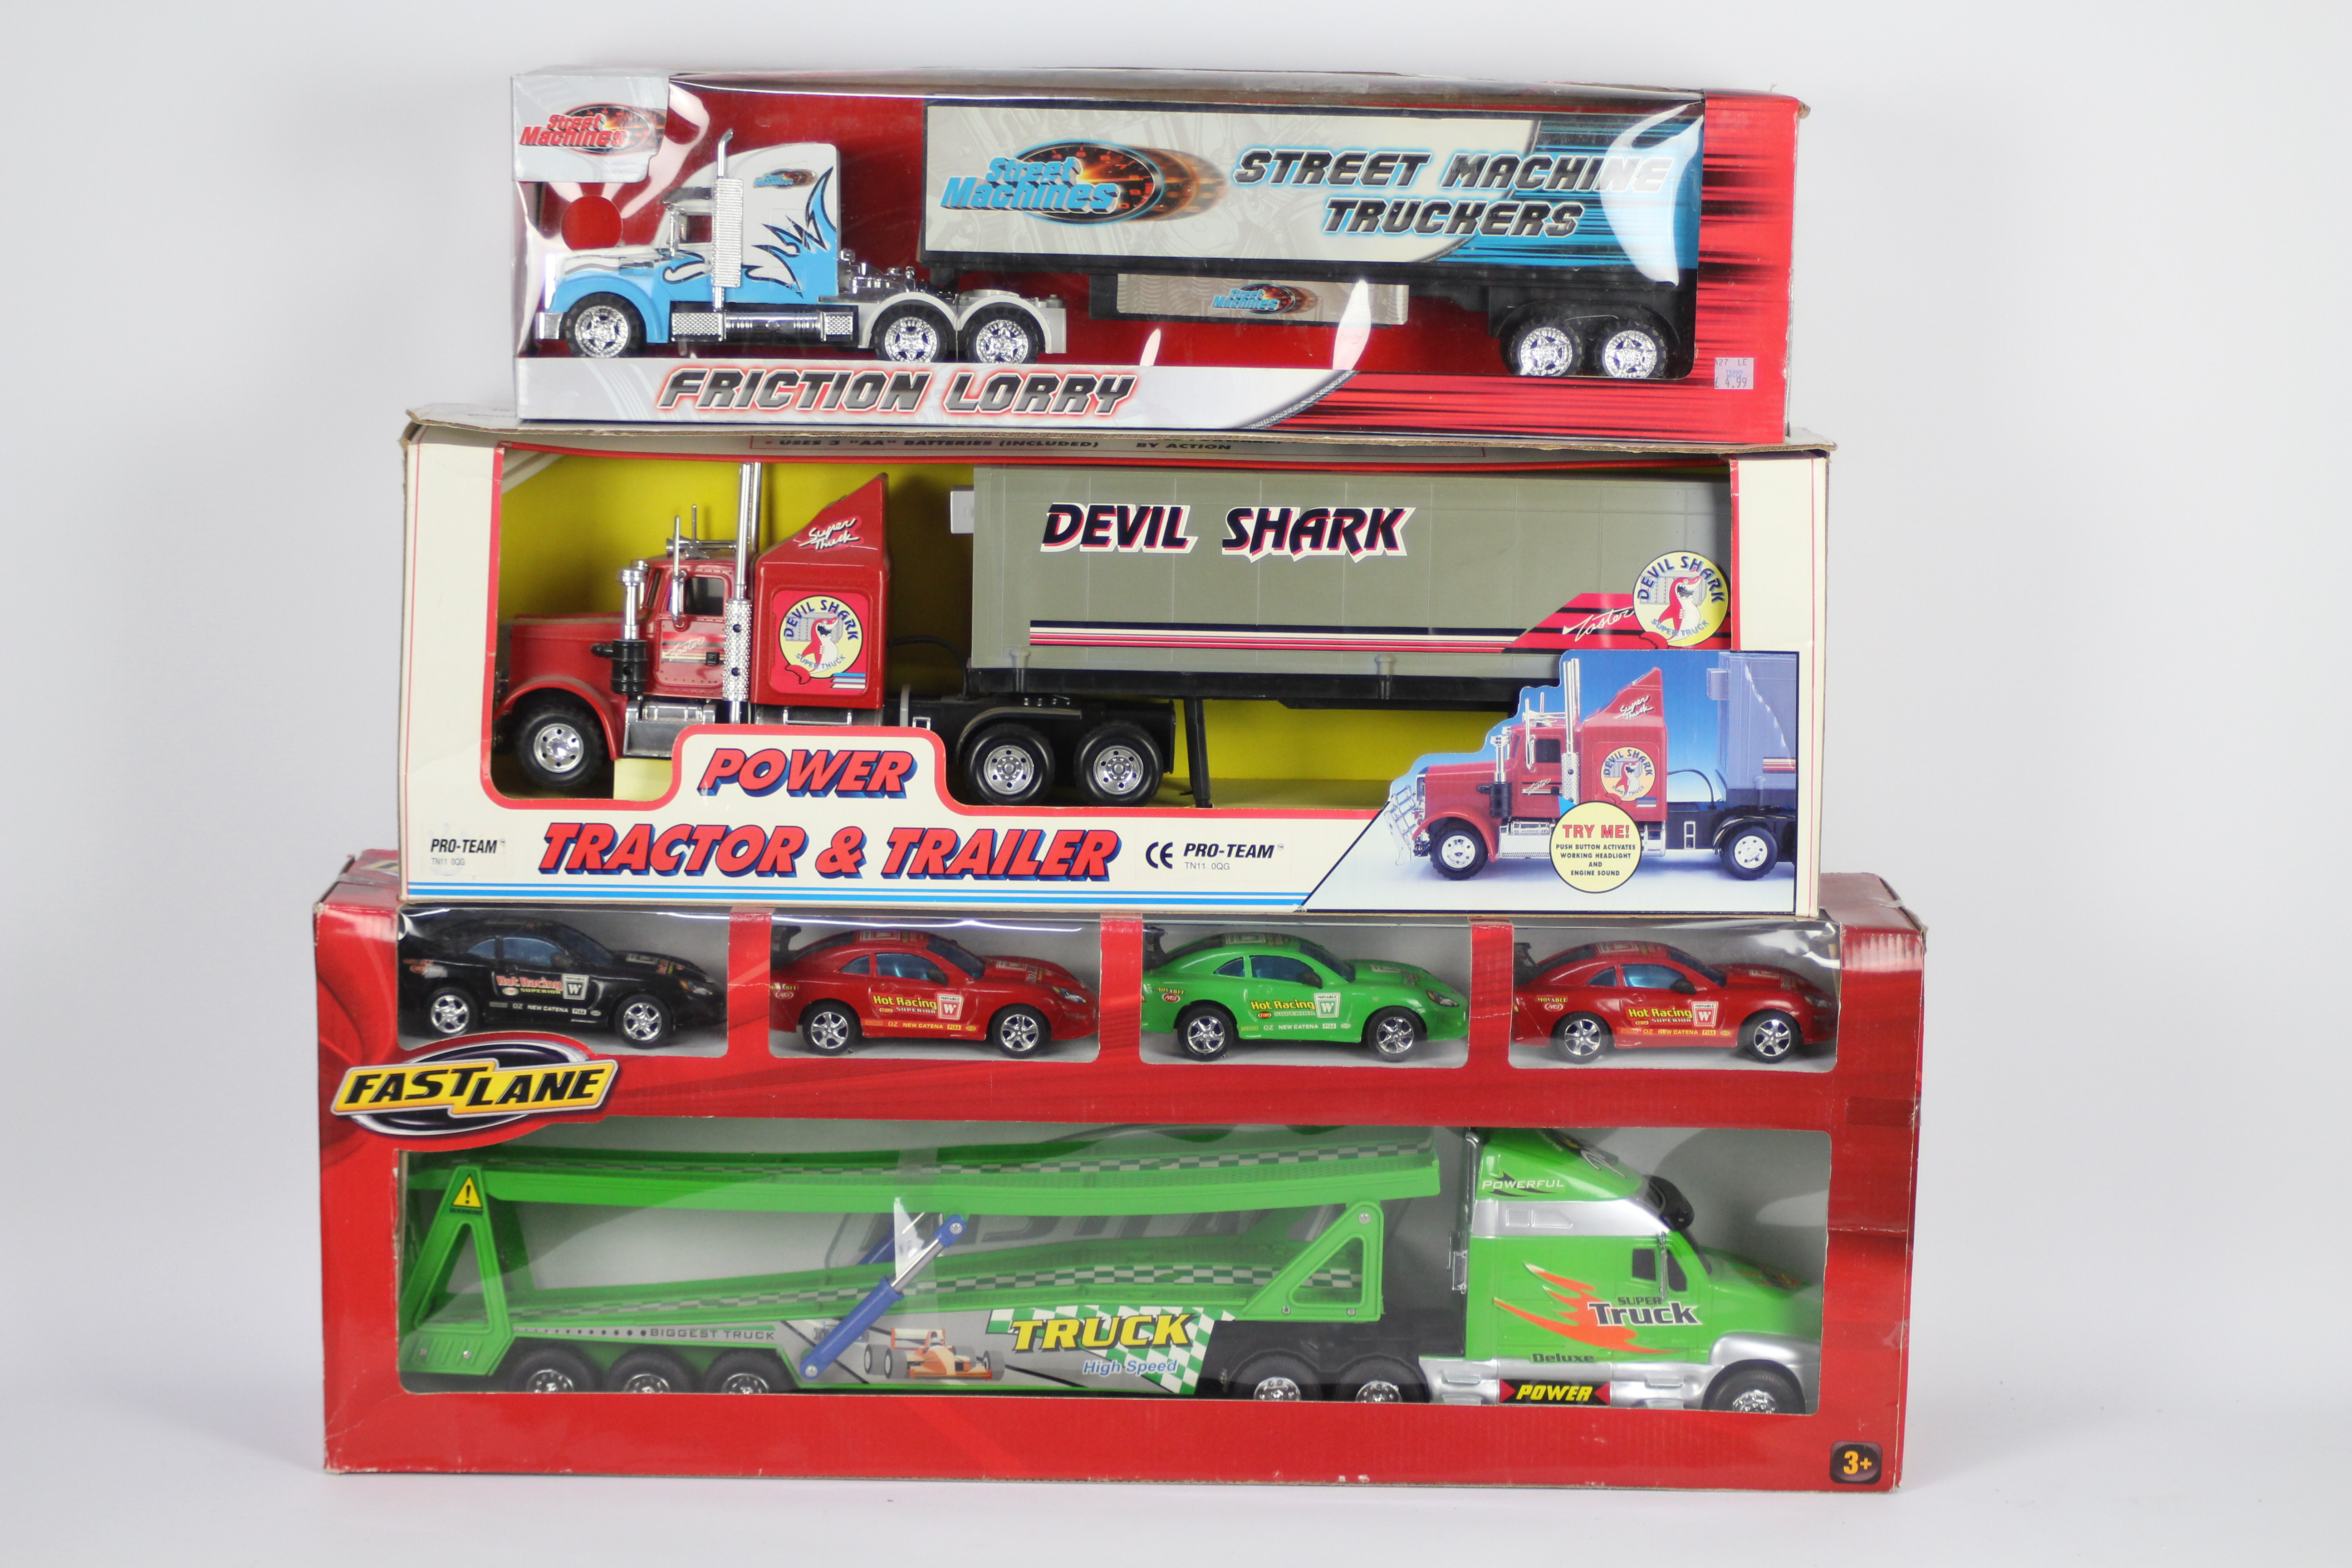 Fast Lane - Pro Team - 3 x boxed American style trucks including the Devil Shark Super Truck,